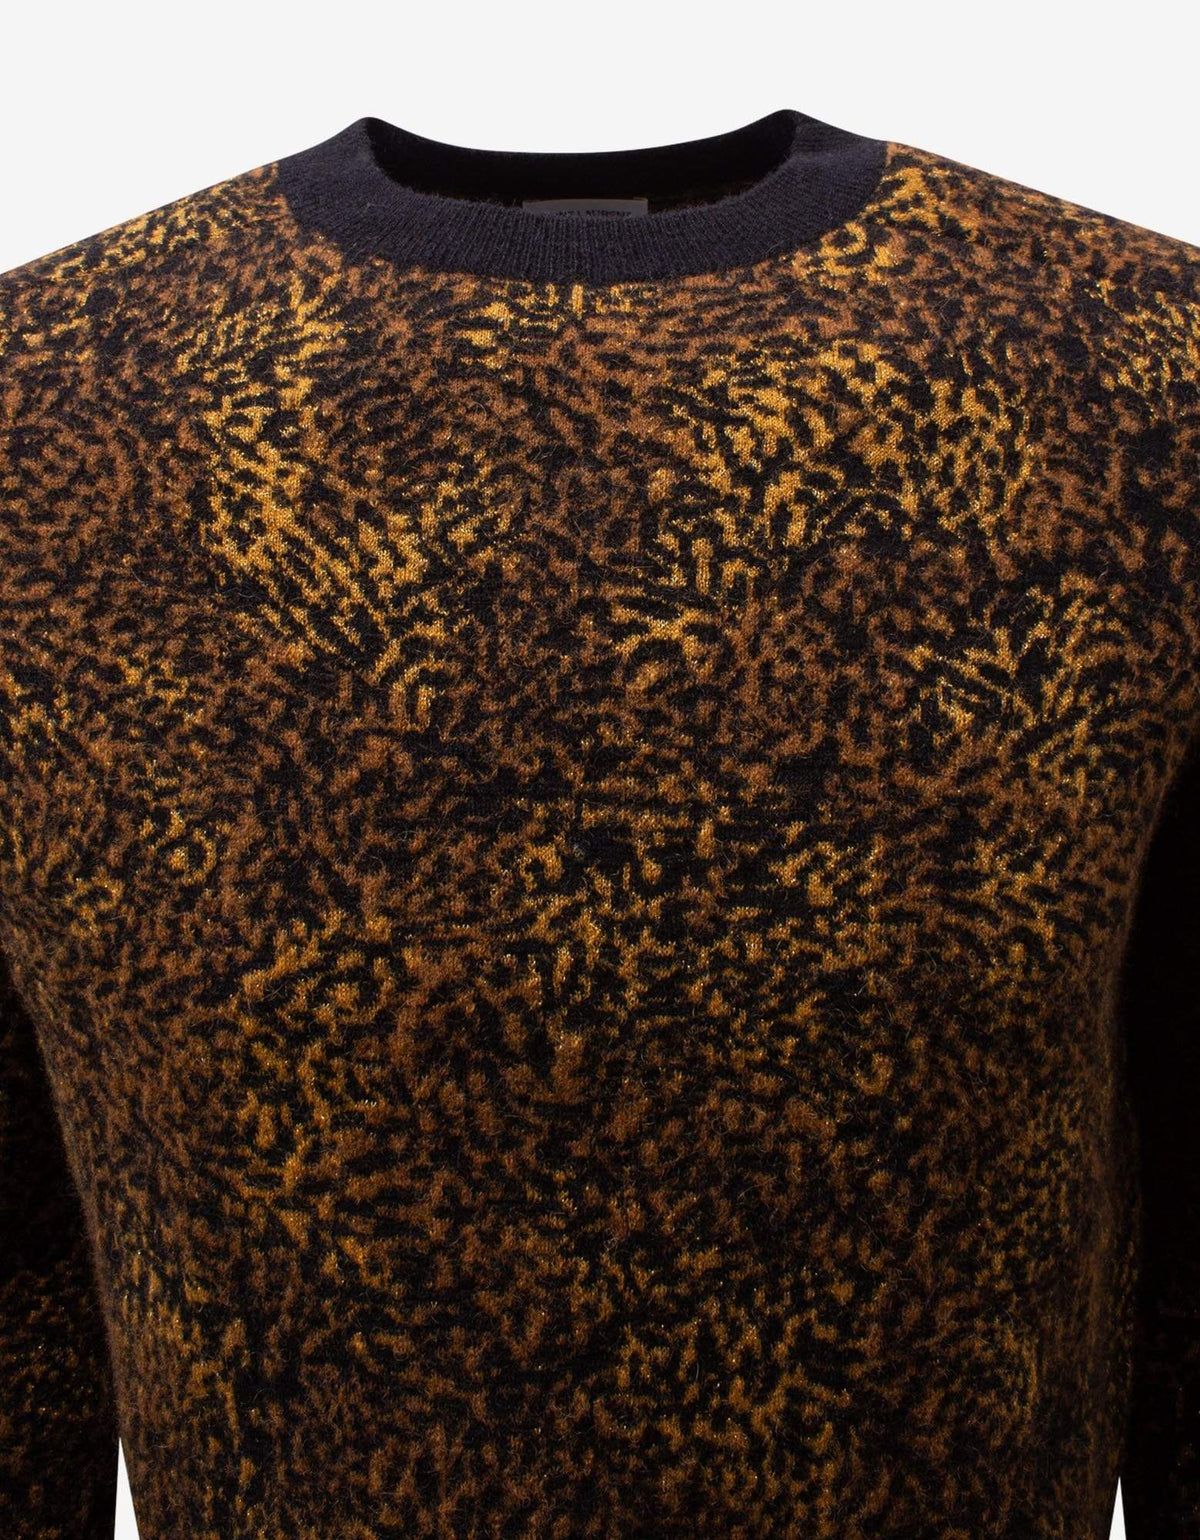 Saint Laurent Leopard Print Wool-Blend Sweater